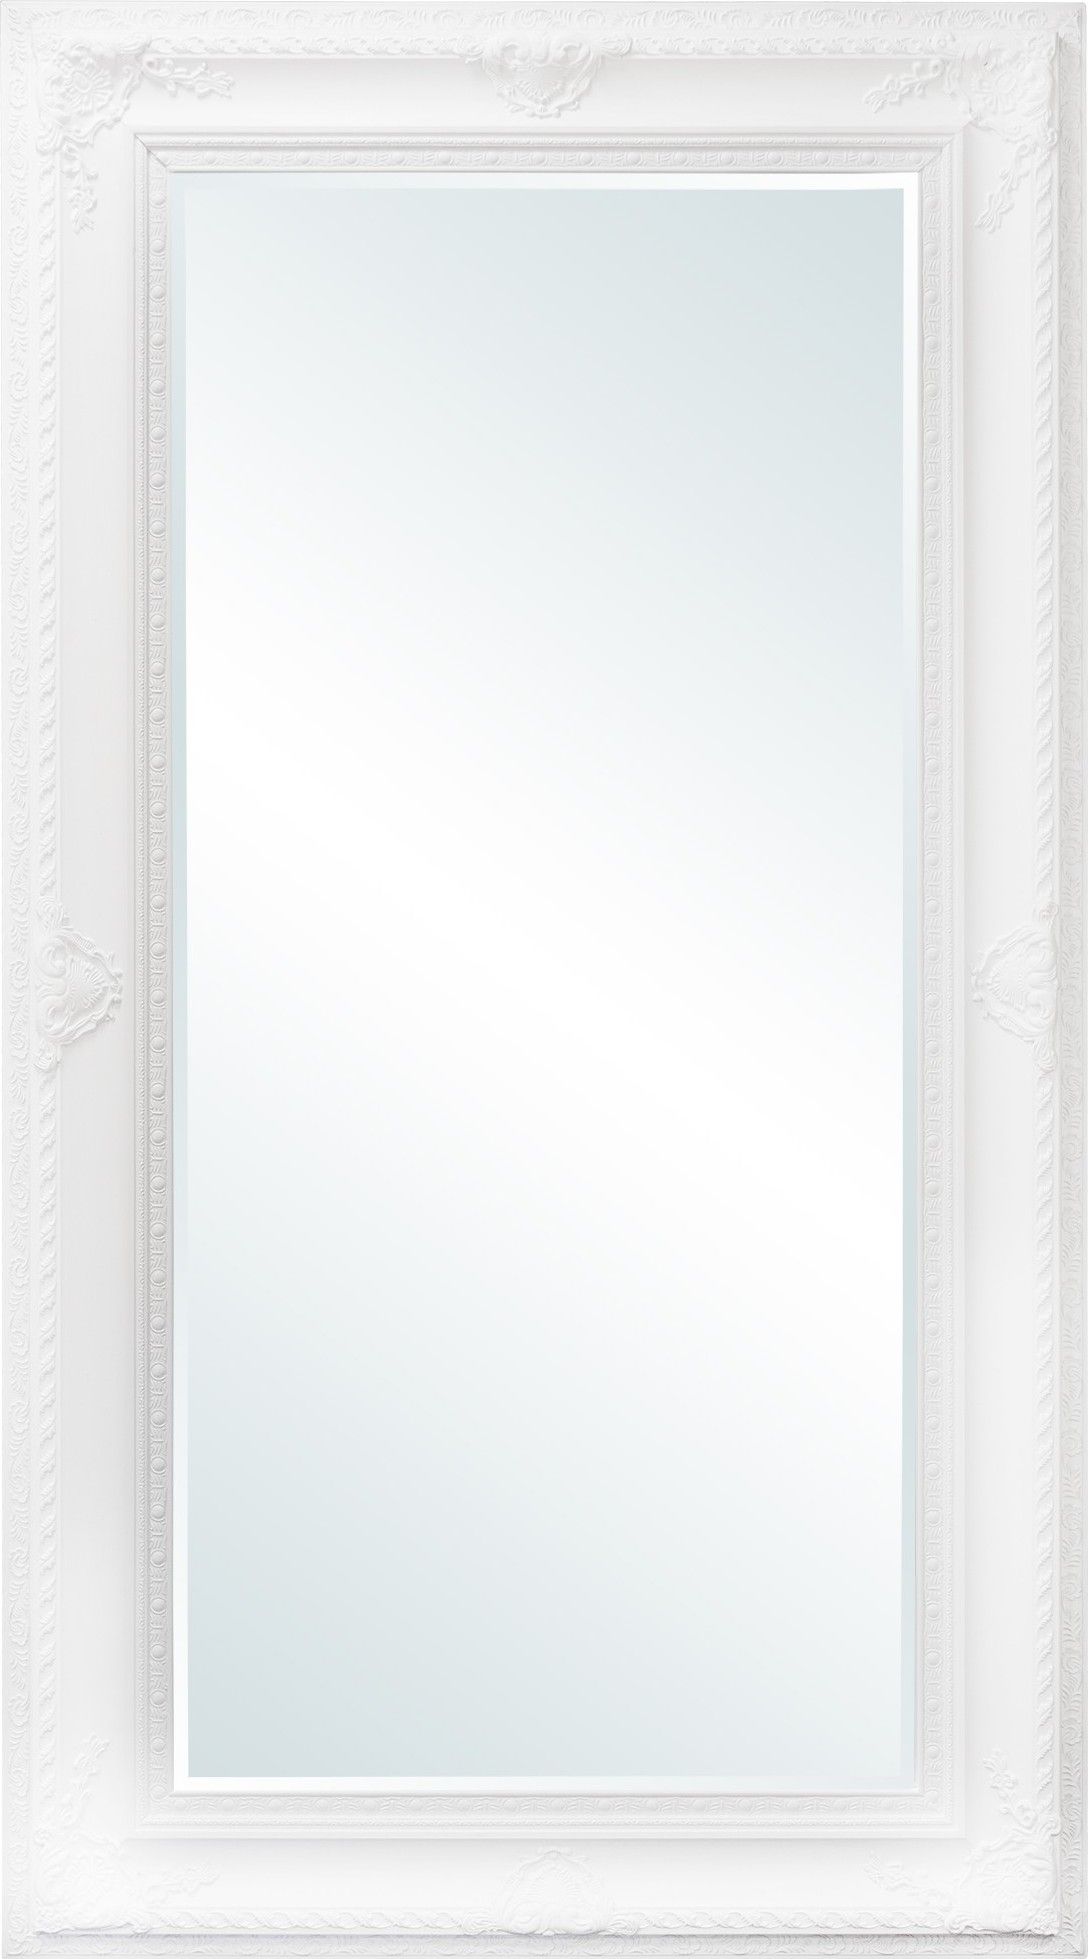 Velké zrcadlo bílé 108026 Mdum - M DUM.cz